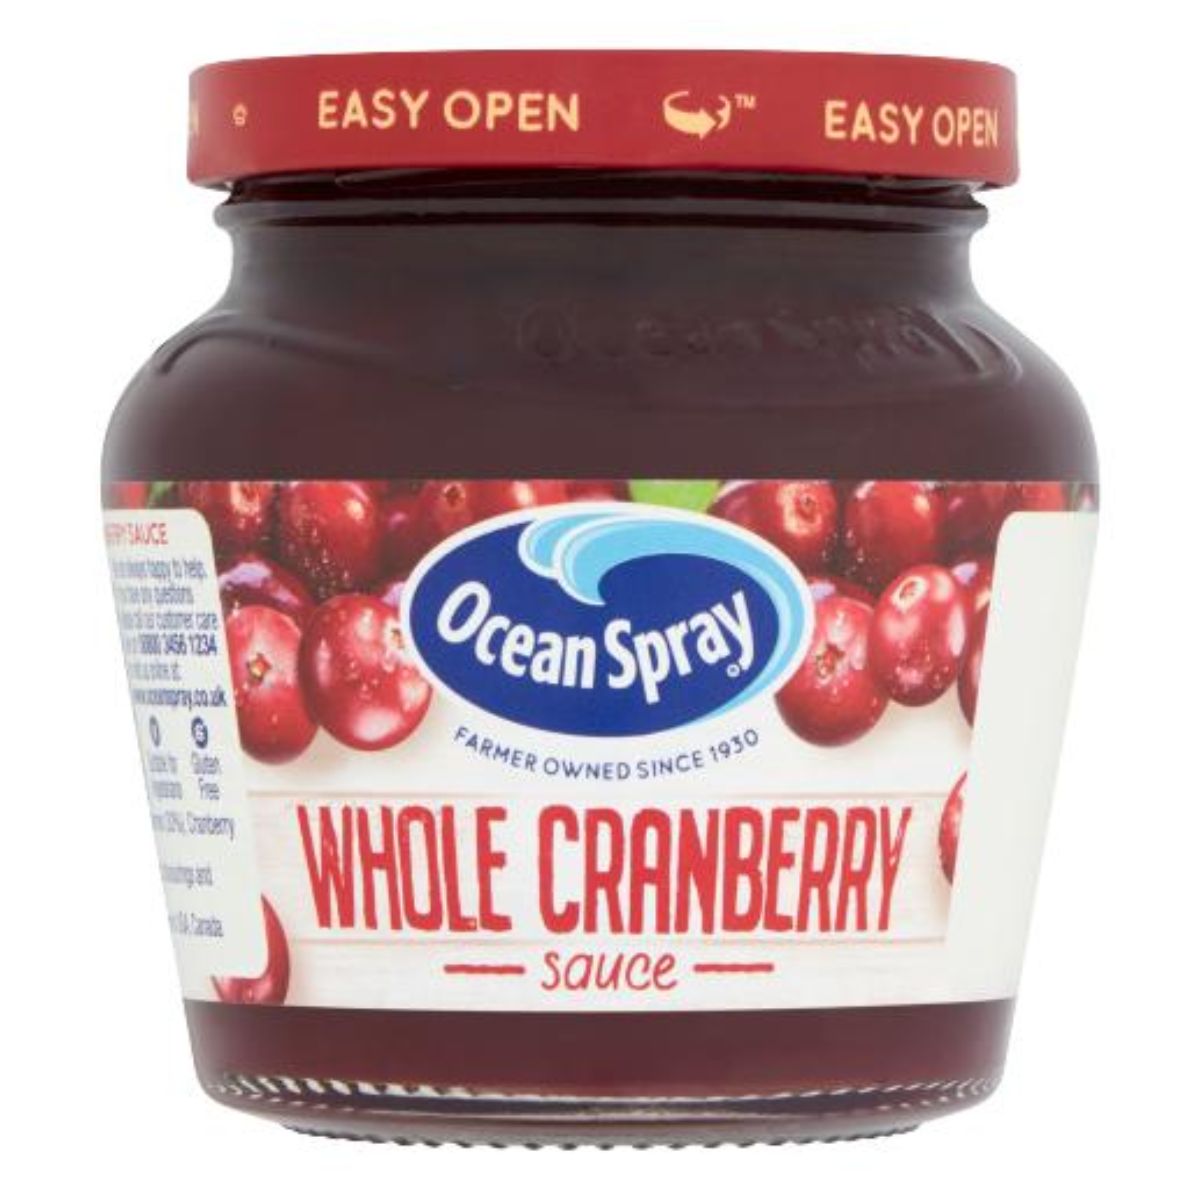 A jar of Ocean Spray - Whole Cranberry Sauce - 250g.